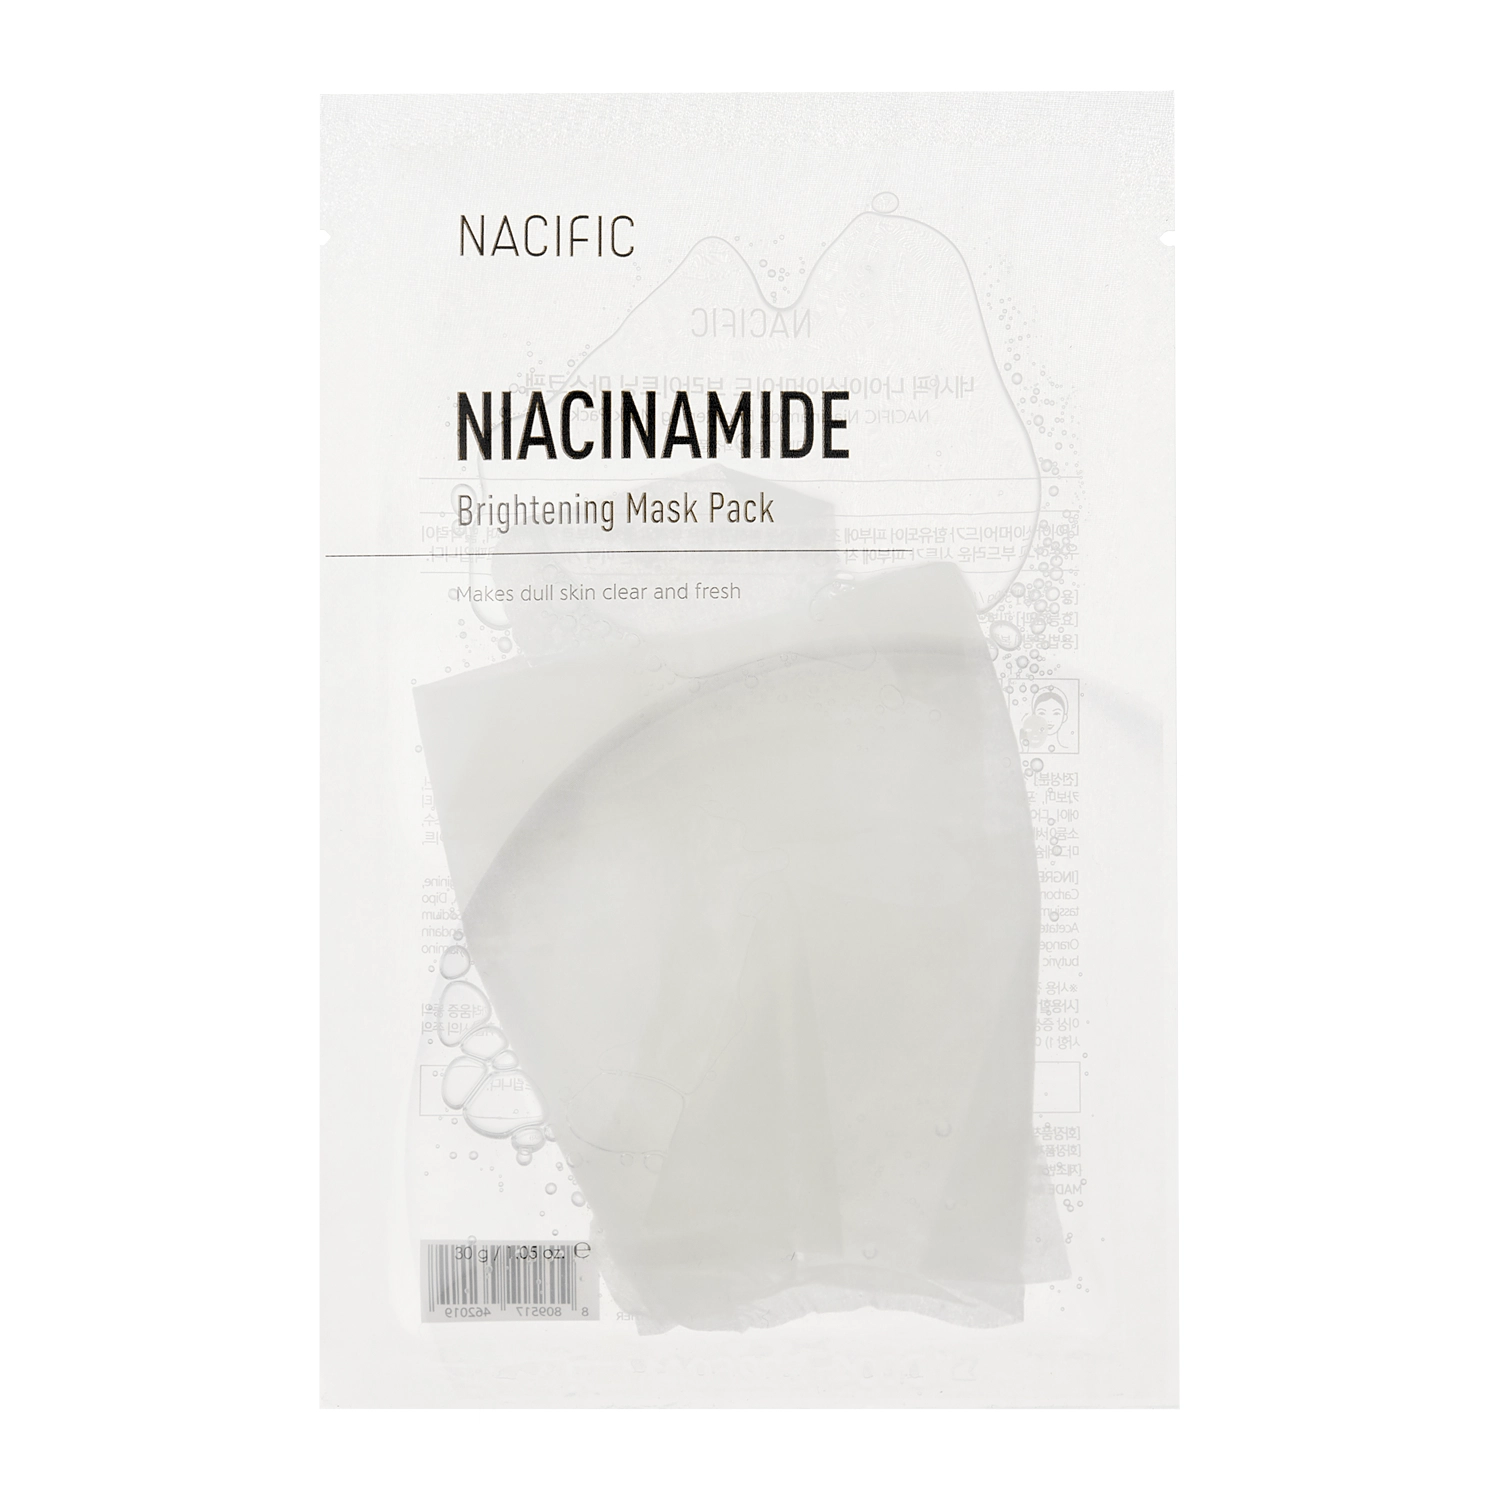 Nacific - NIACINAMIDE Brightening Mask - Осветляющая тканевая маска с ниацинамидом - 30g